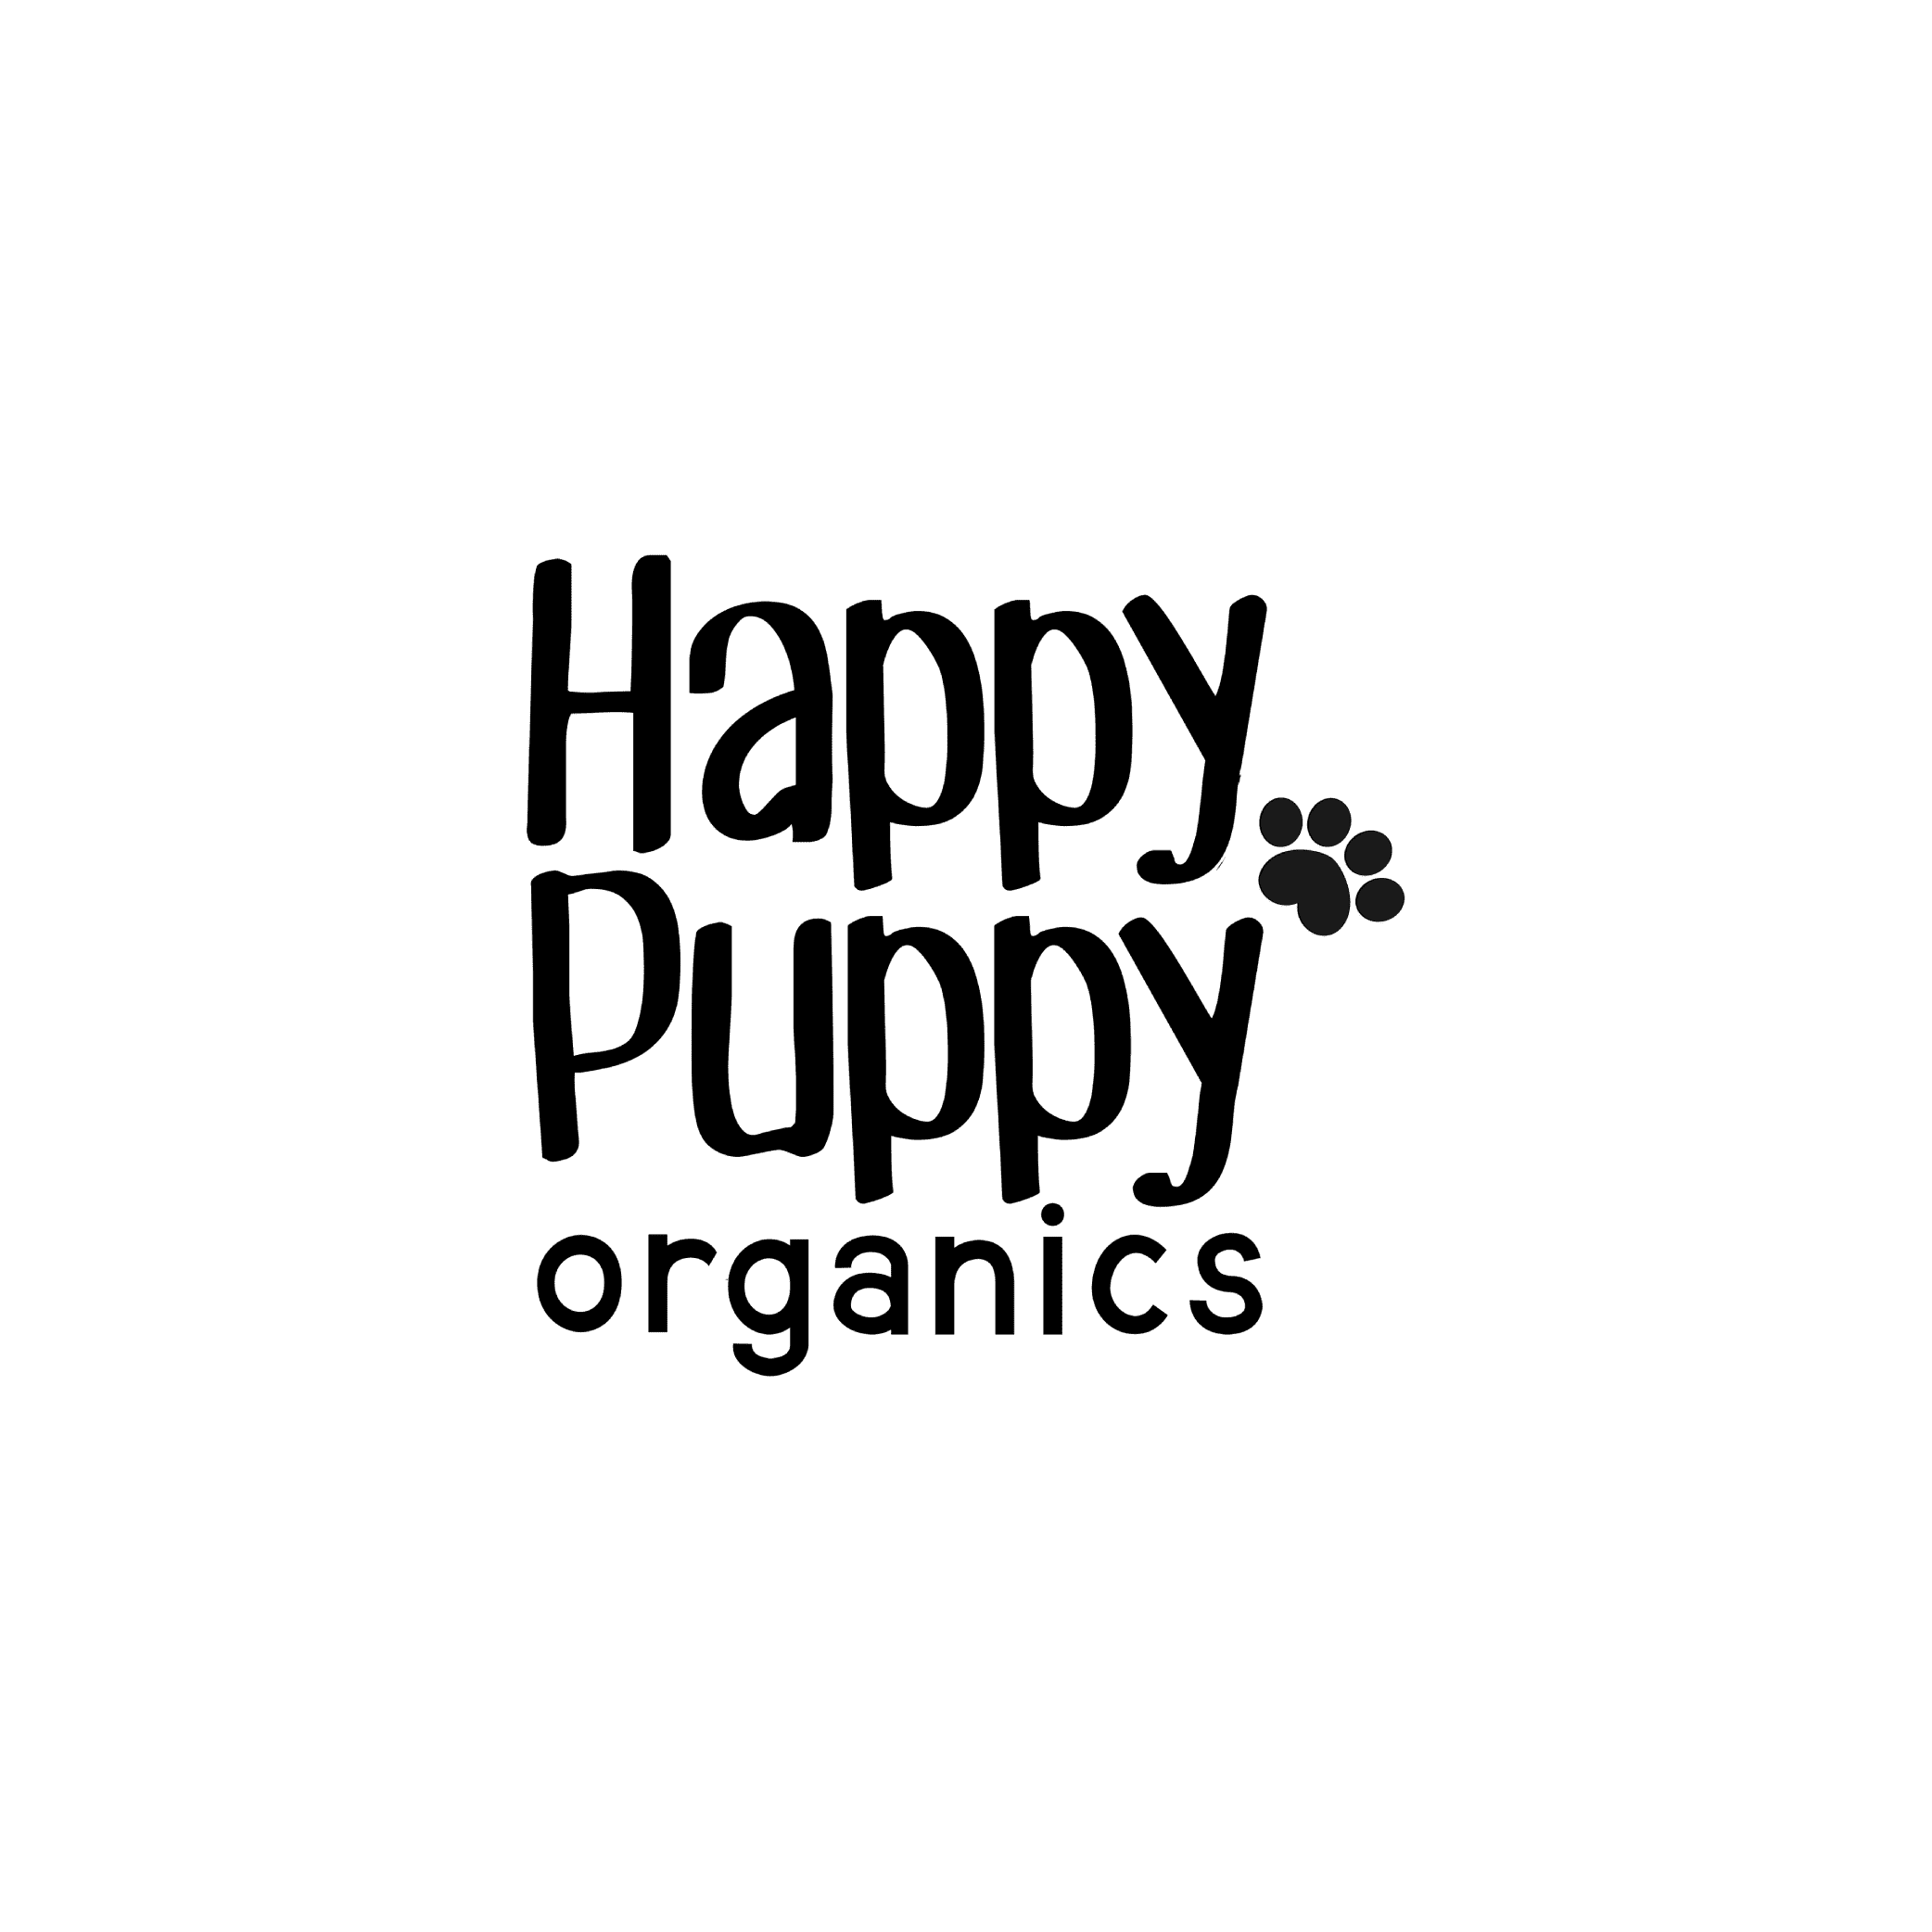 Happy Puppy Organics - business consutancy